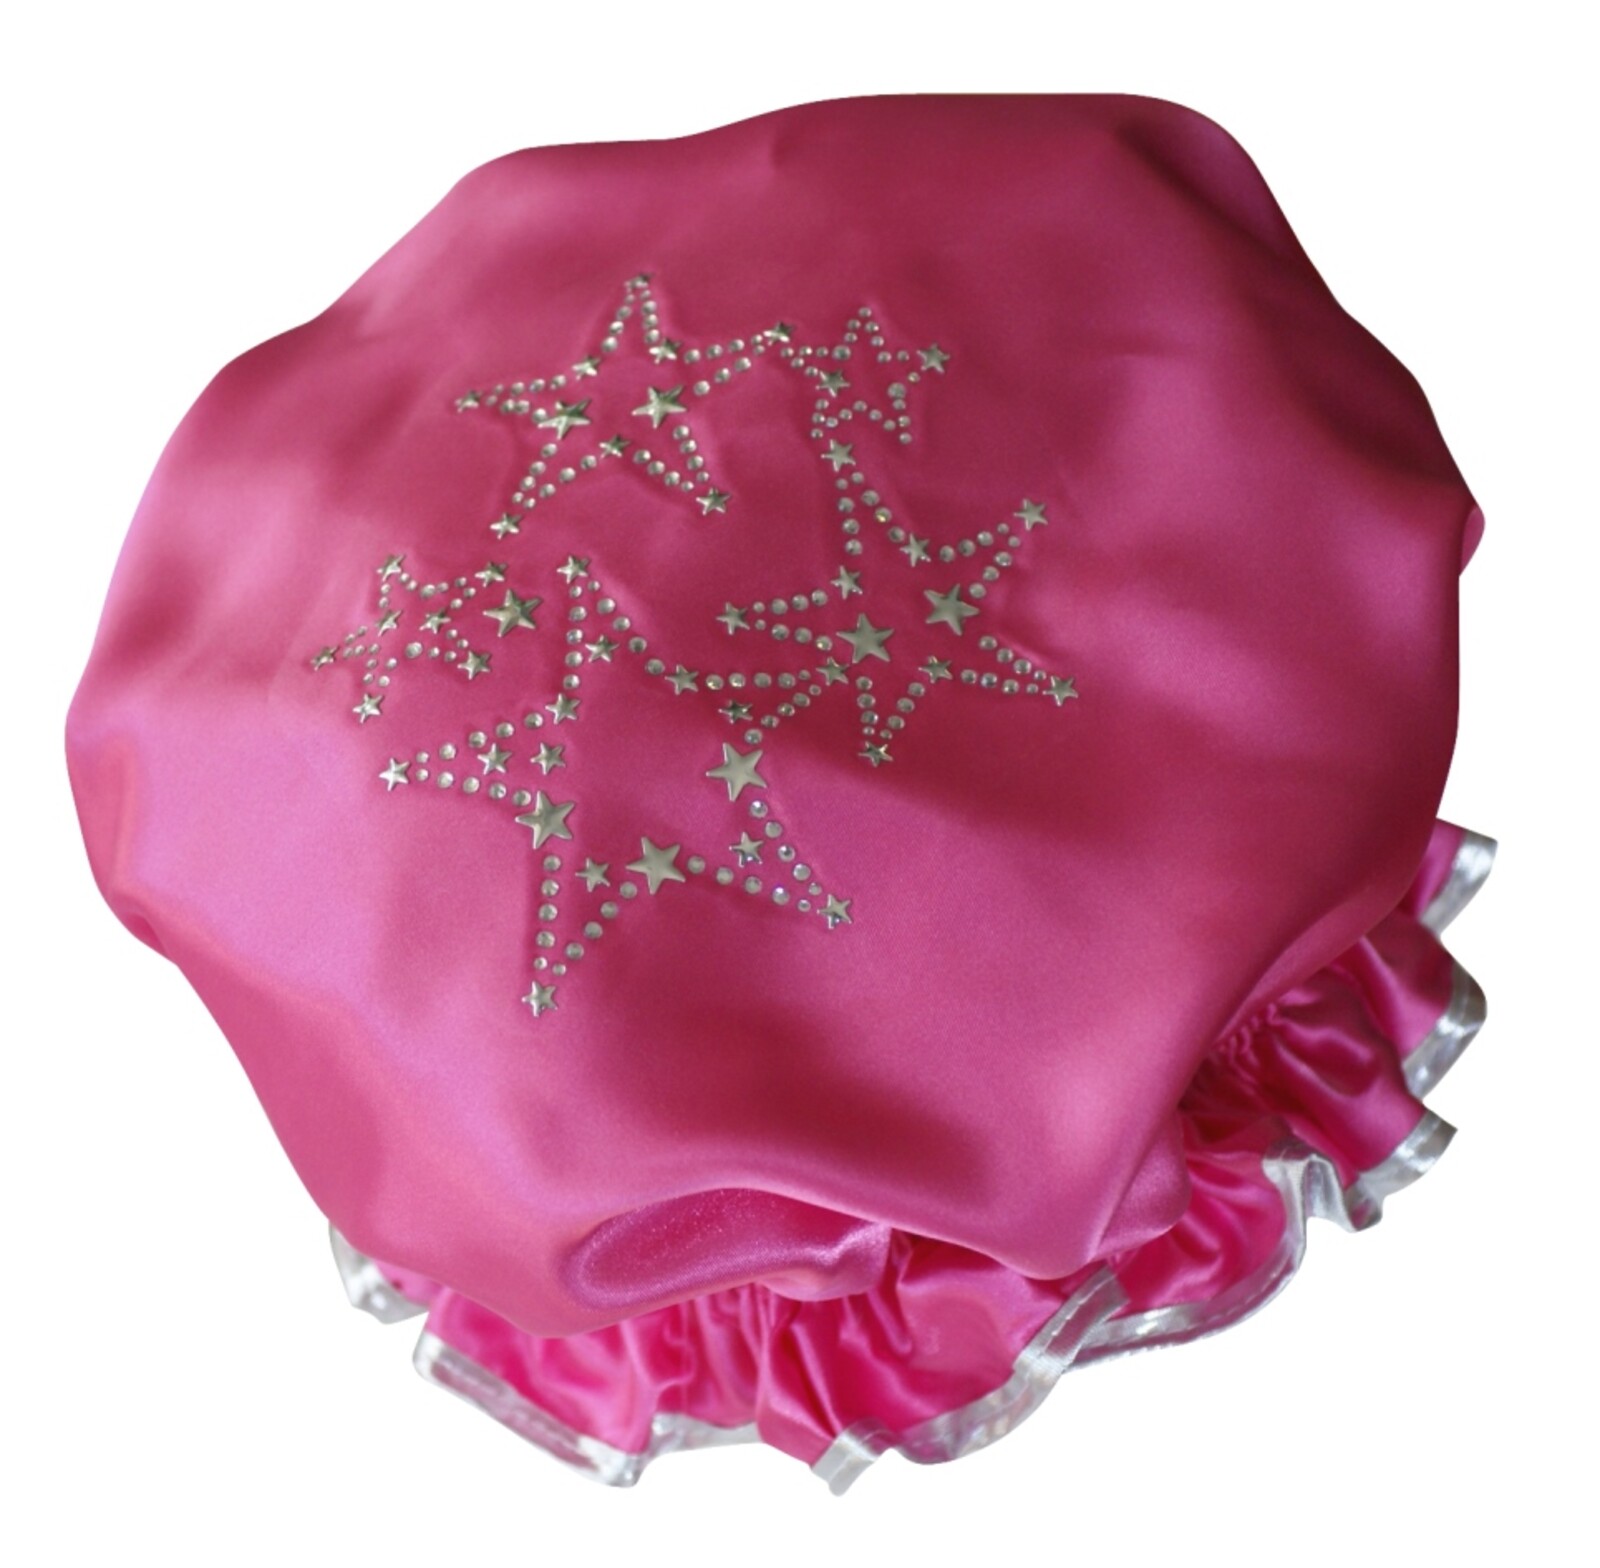 Diamante Shower Cap - STARS - Hot Pink 